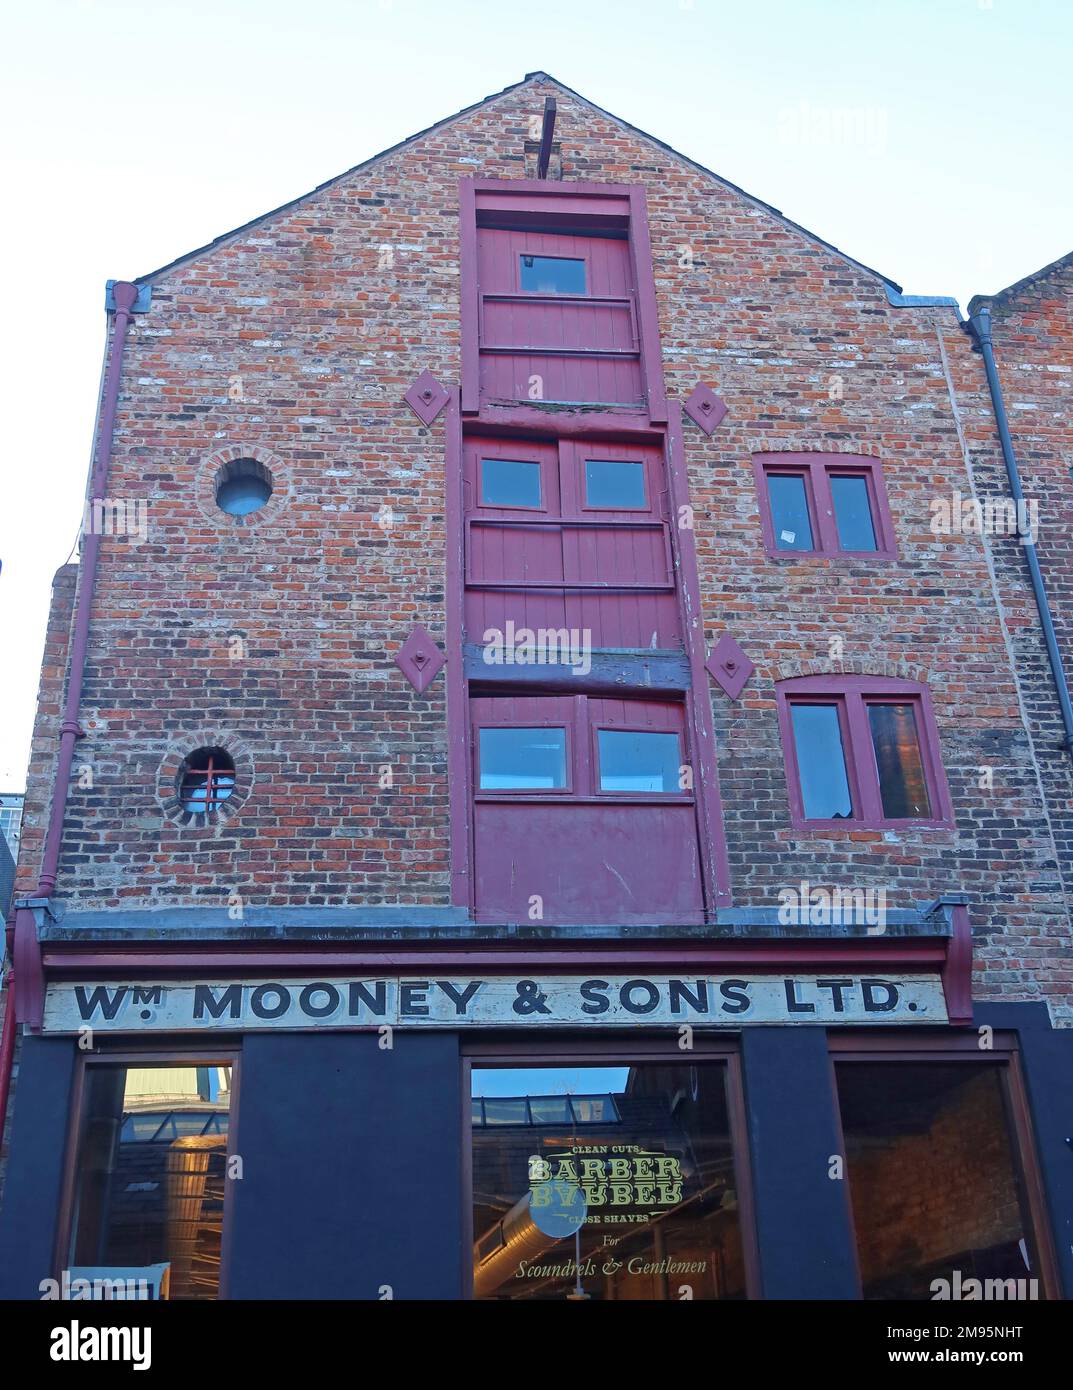 BarberBarber, à Wm Mooney & Sons Ltd, ancien entrepôt, à College Lane, Liverpool, Merseyside, ANGLETERRE, ROYAUME-UNI, L1 3BN Banque D'Images